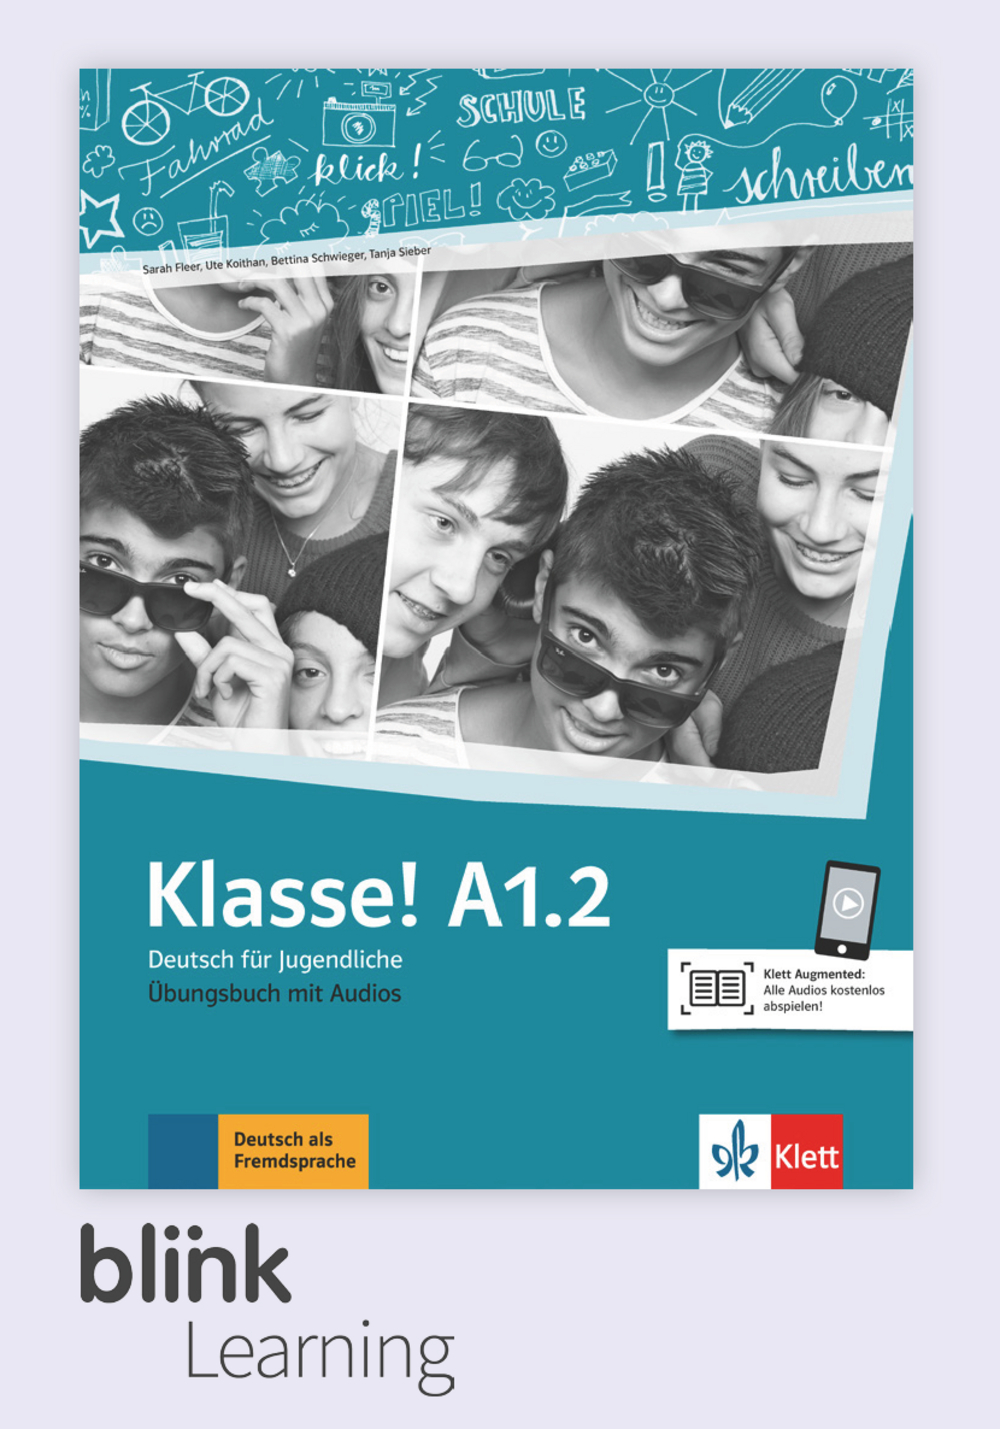 Klasse! A1.2 Digital Ubungsbuch fur Lernende / Цифровая рабочая тетрадь для ученика